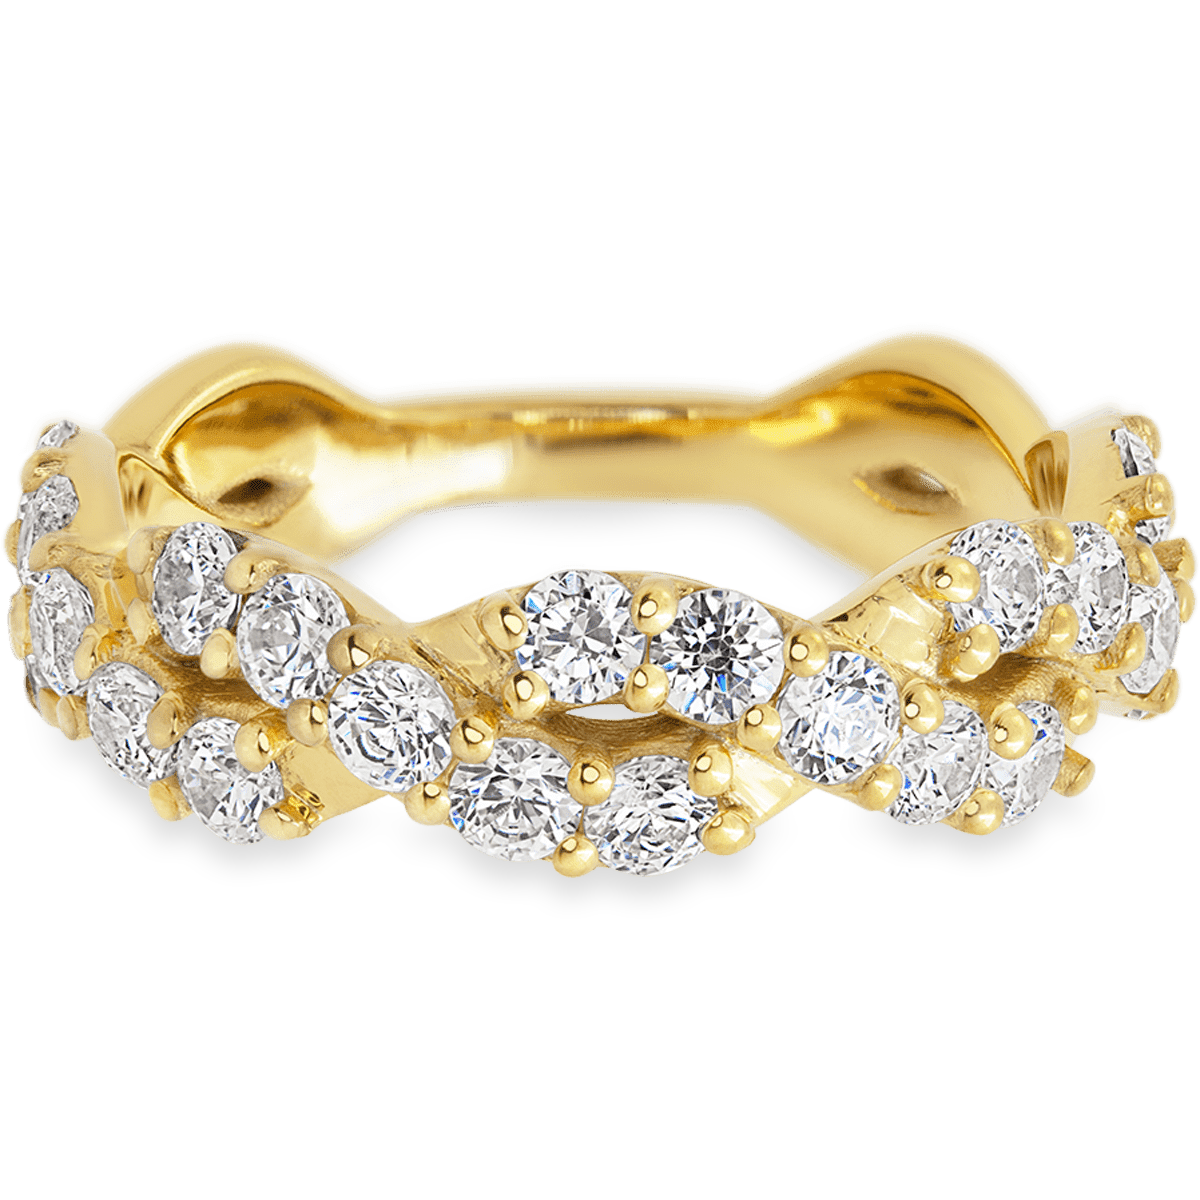 Braided Yellow Gold + White Diamonds Womens Wedding or Everyday Ring